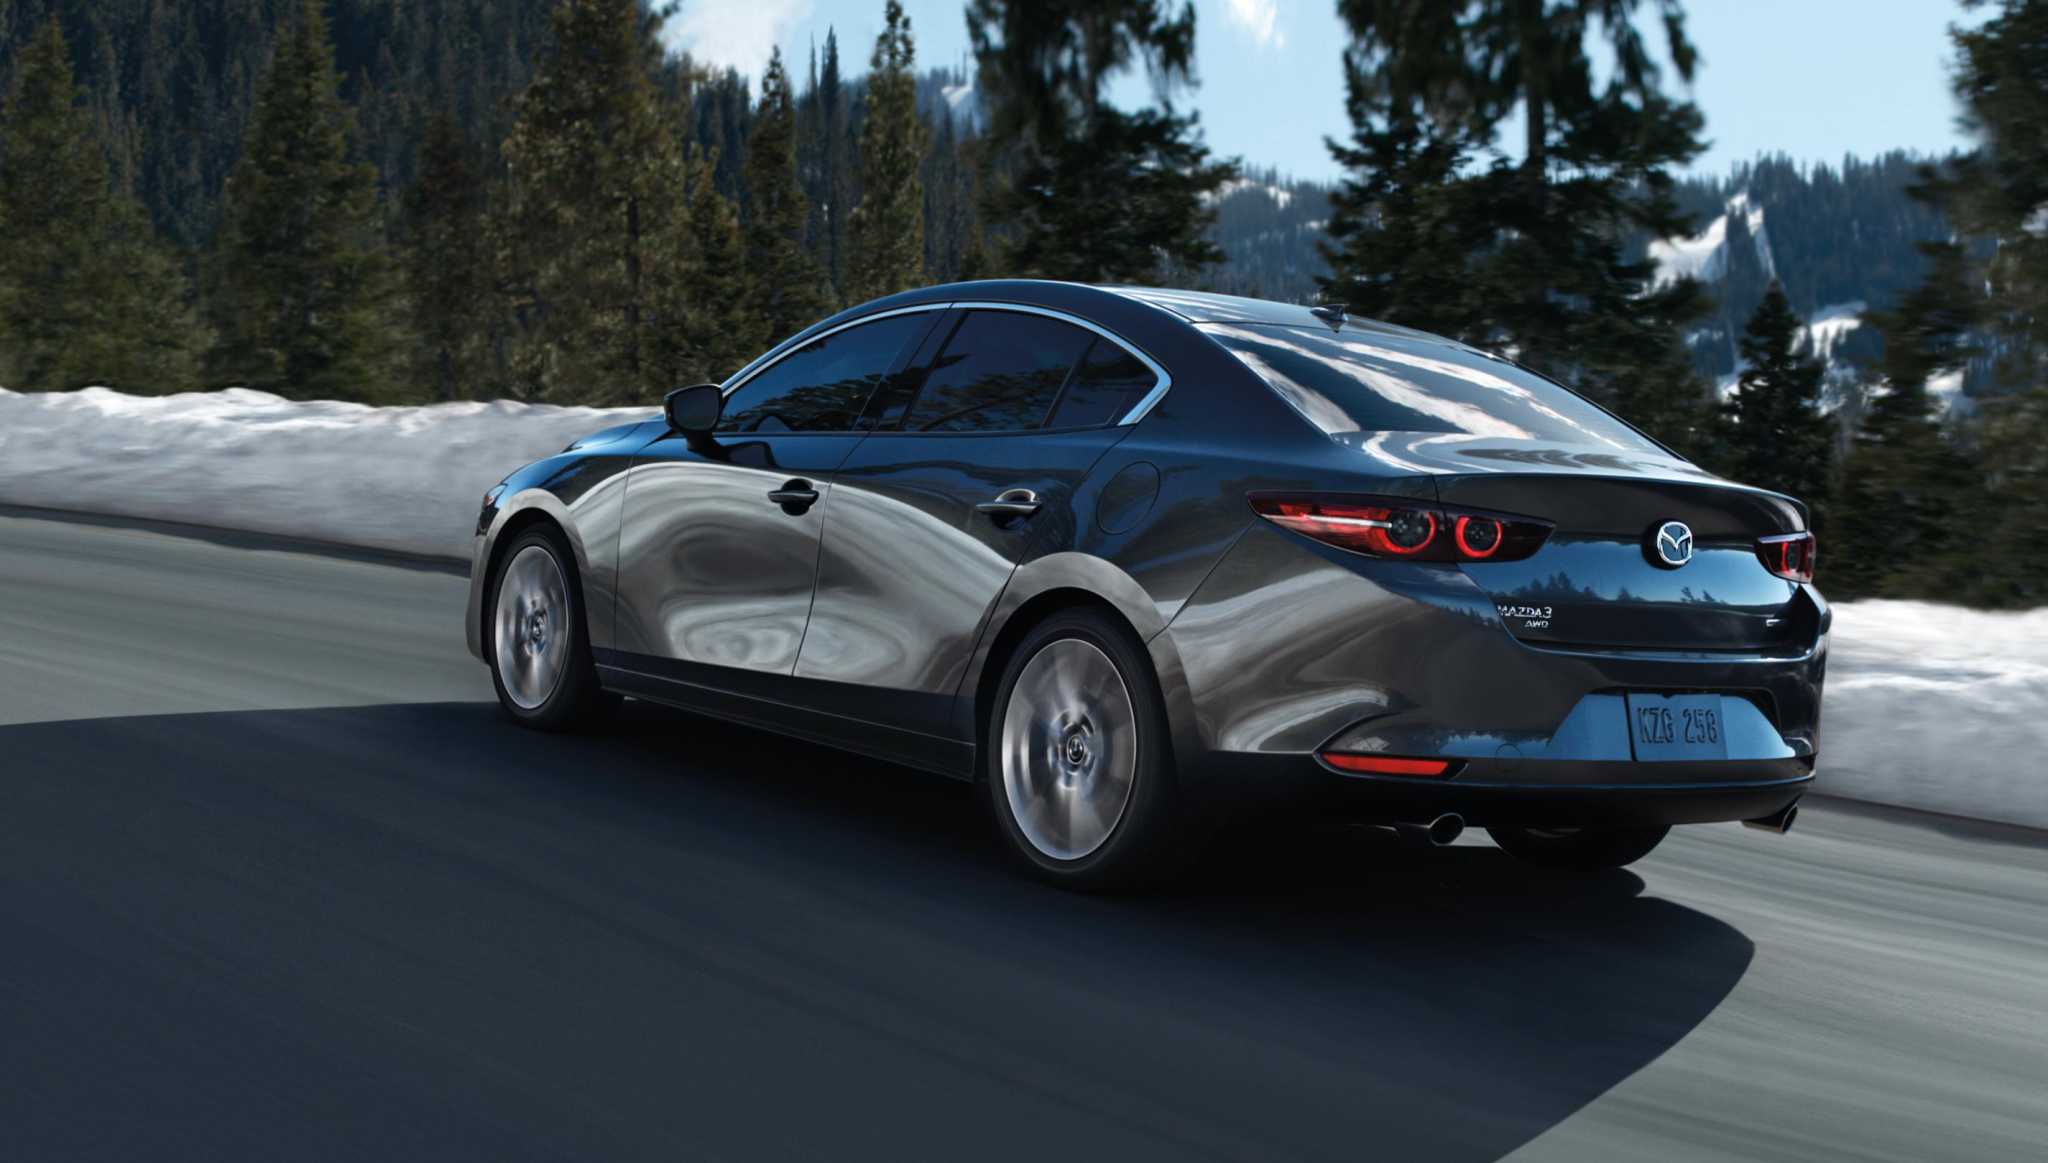 2020 Mazda3 sacrifices fuel economy for AWD option